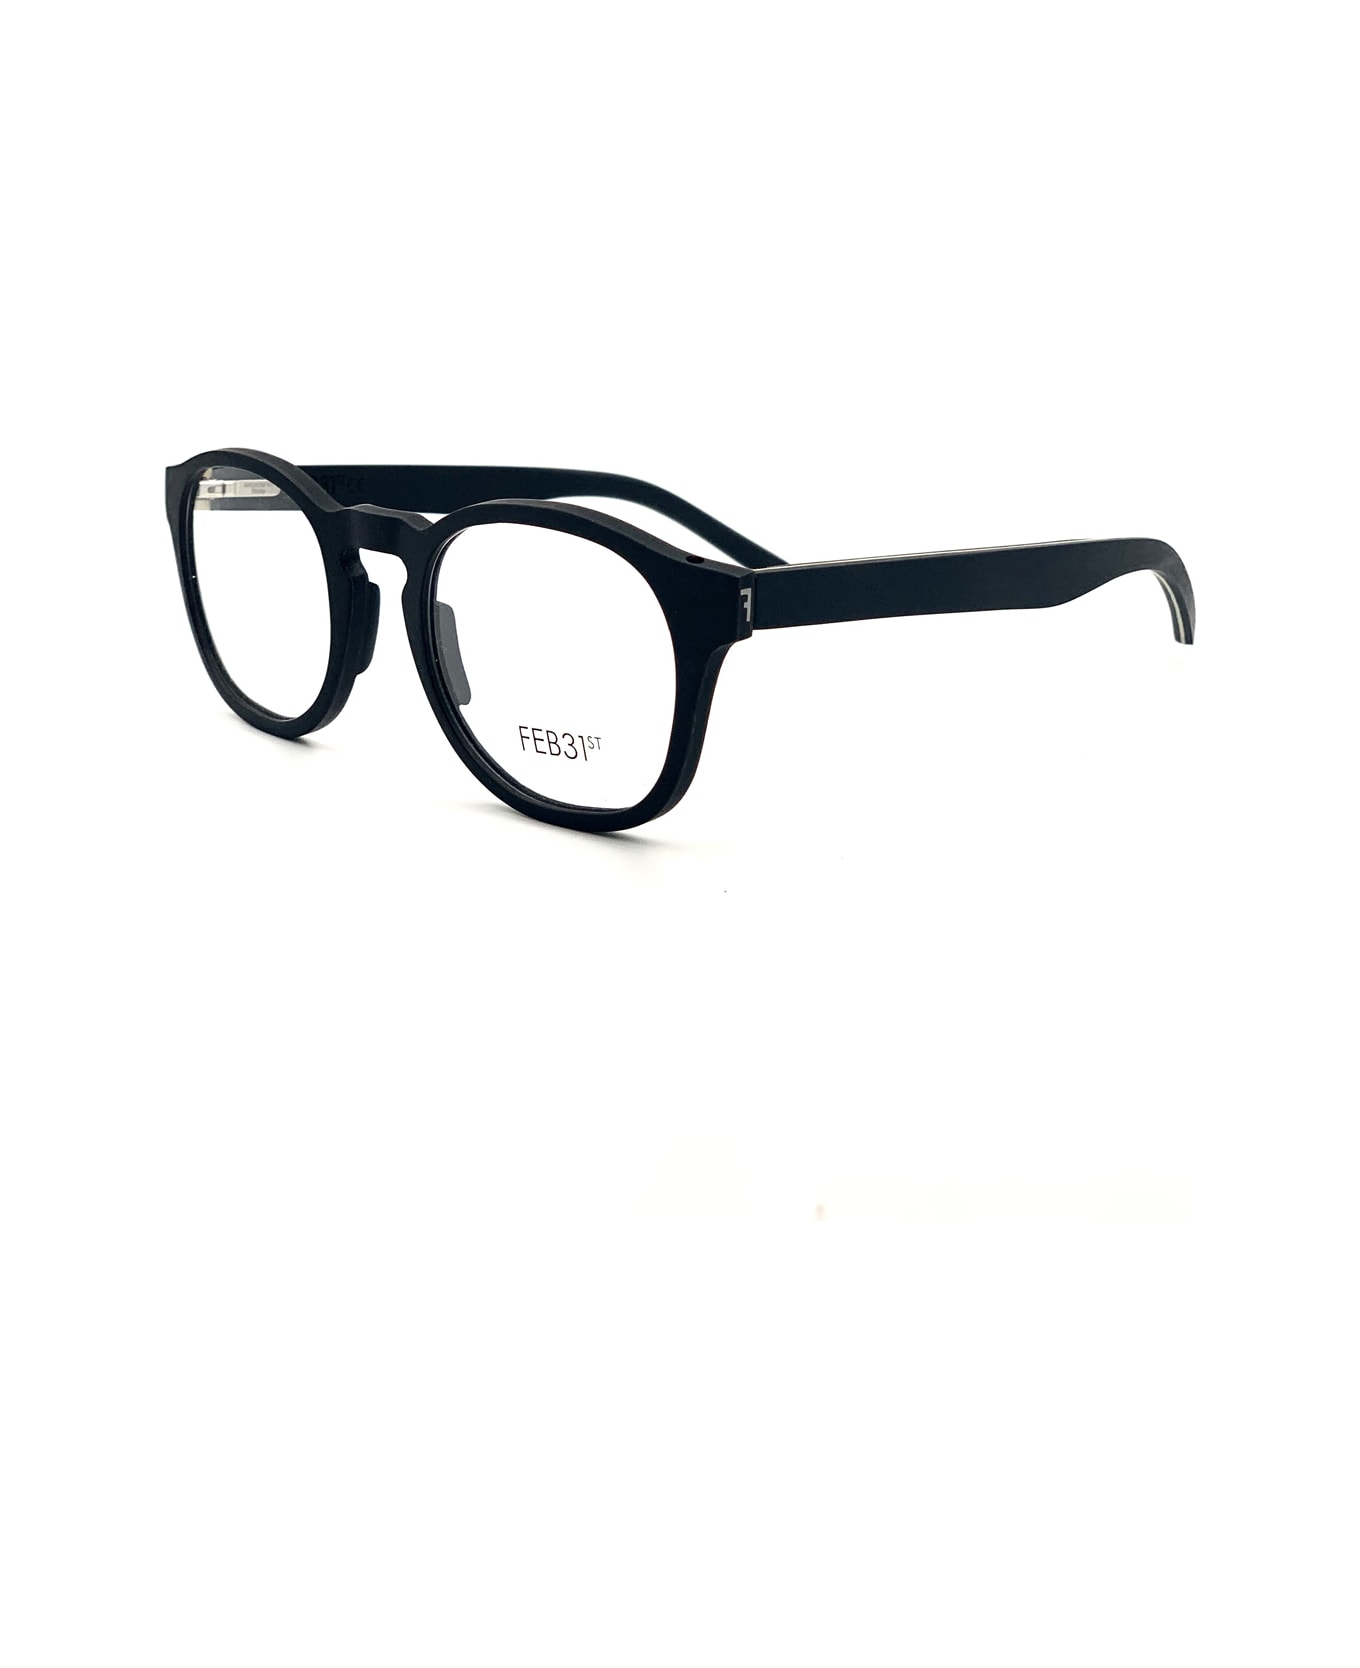 Feb31st Pavo Black Glasses - Nero